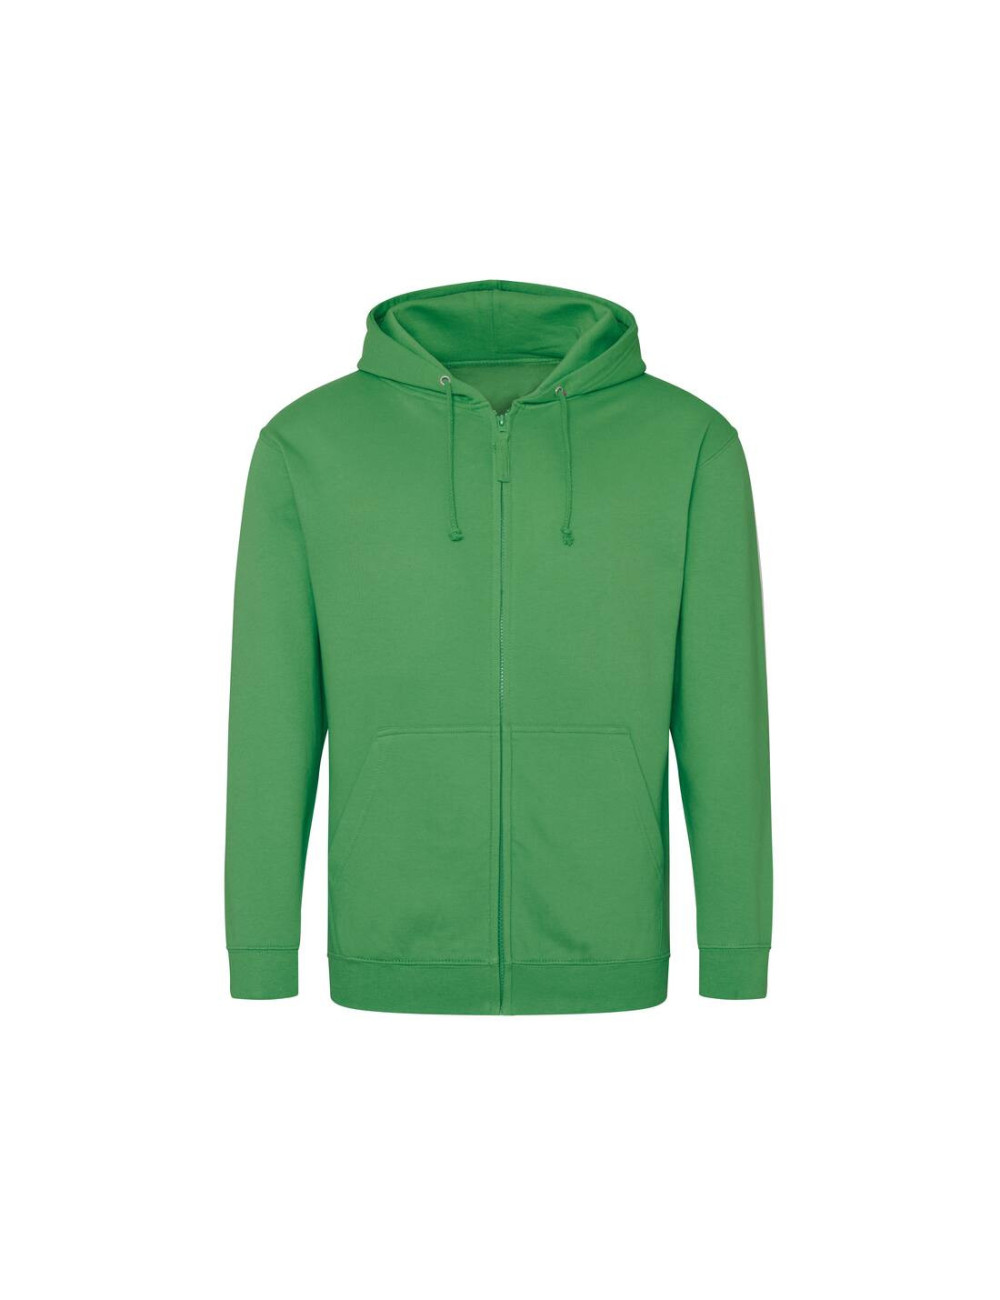 AWDIS JH050 - Zipped sweatshirt  Colors:Kelly Green 